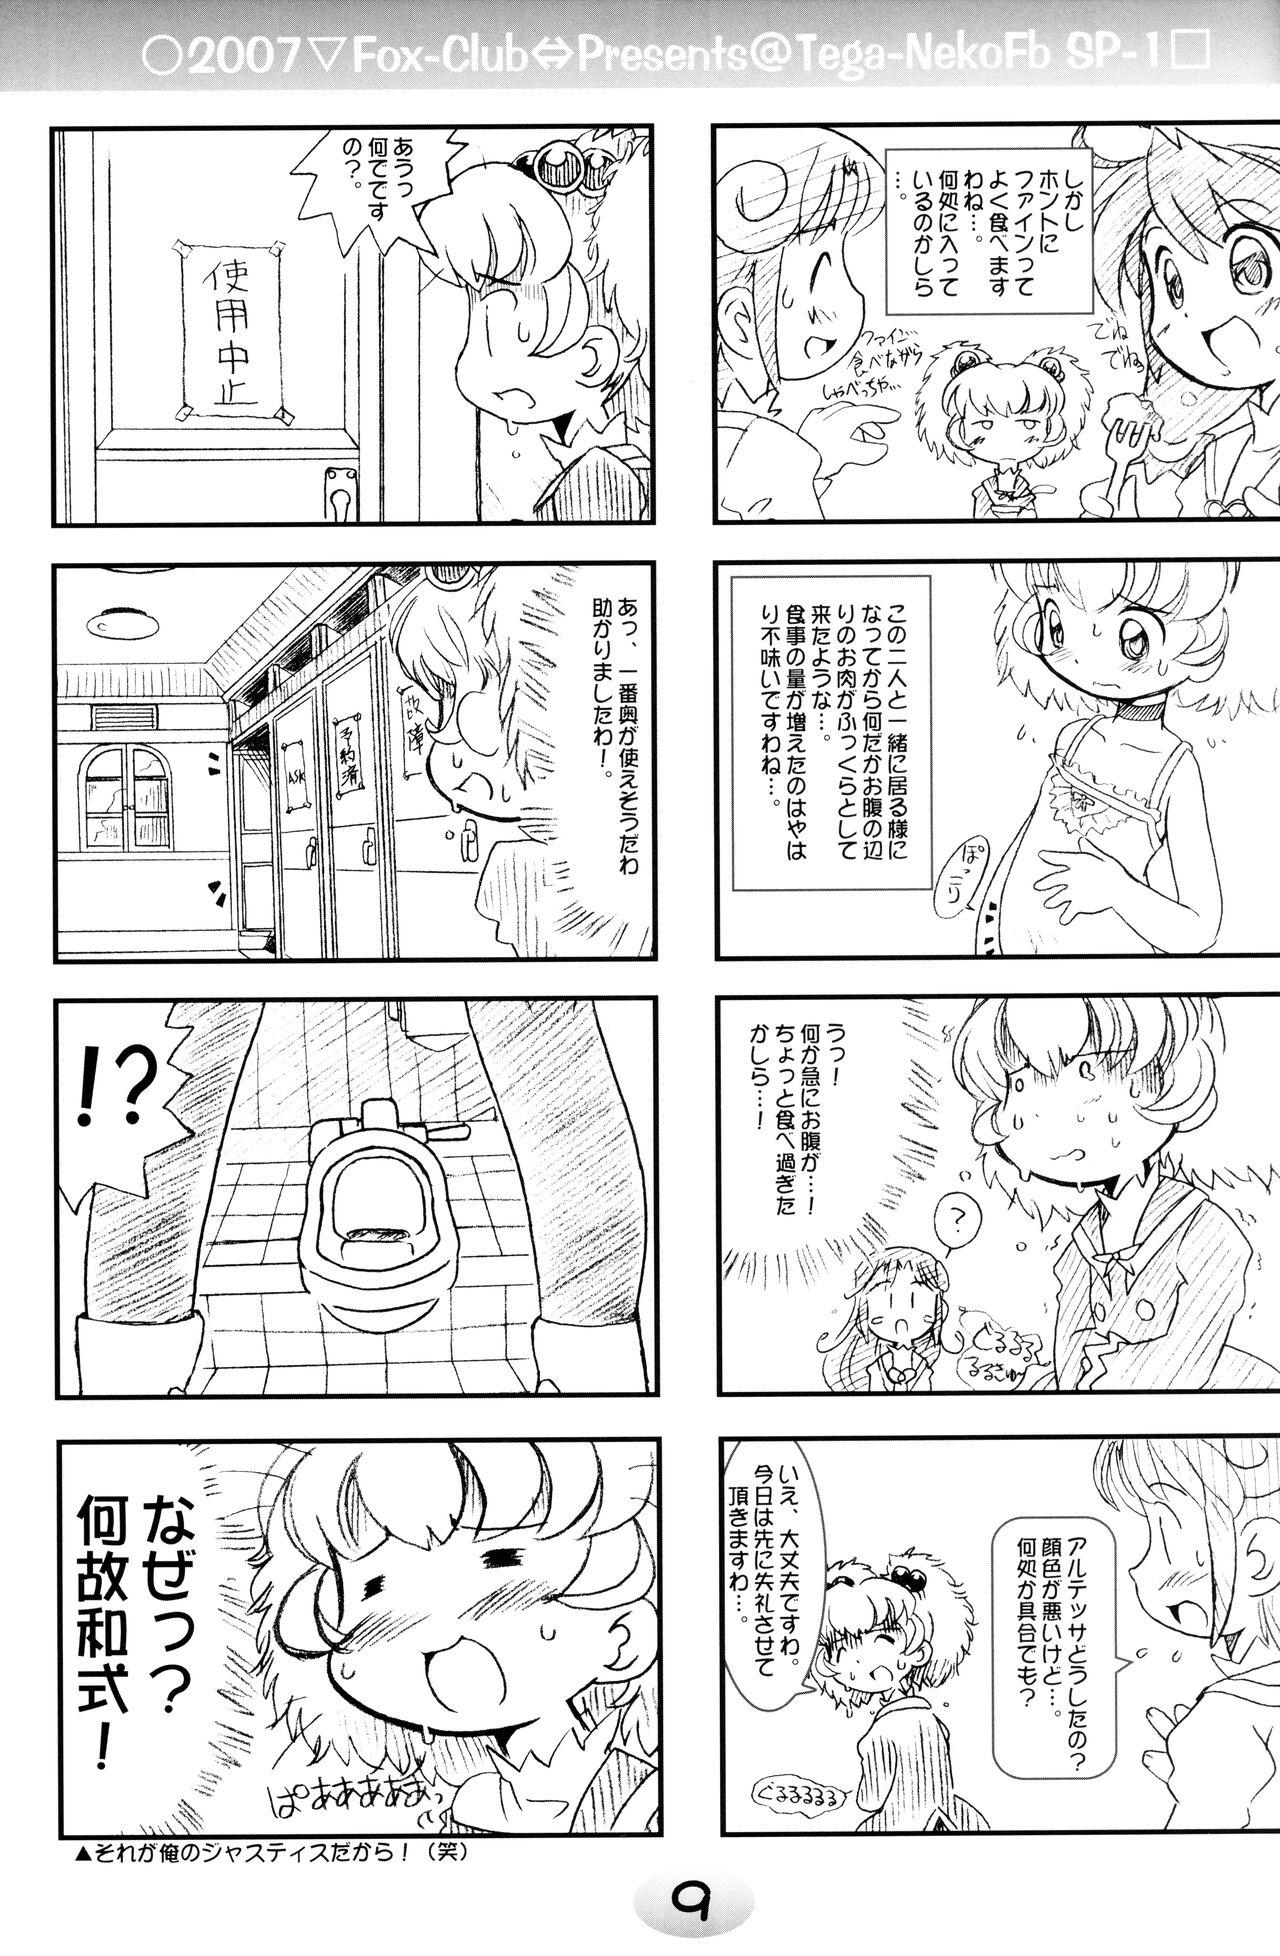 Ethnic TeGa-NeKo Fb/SP Futago Hime Plus - Fushigiboshi no futagohime | twin princesses of the wonder planet Gaping - Page 7